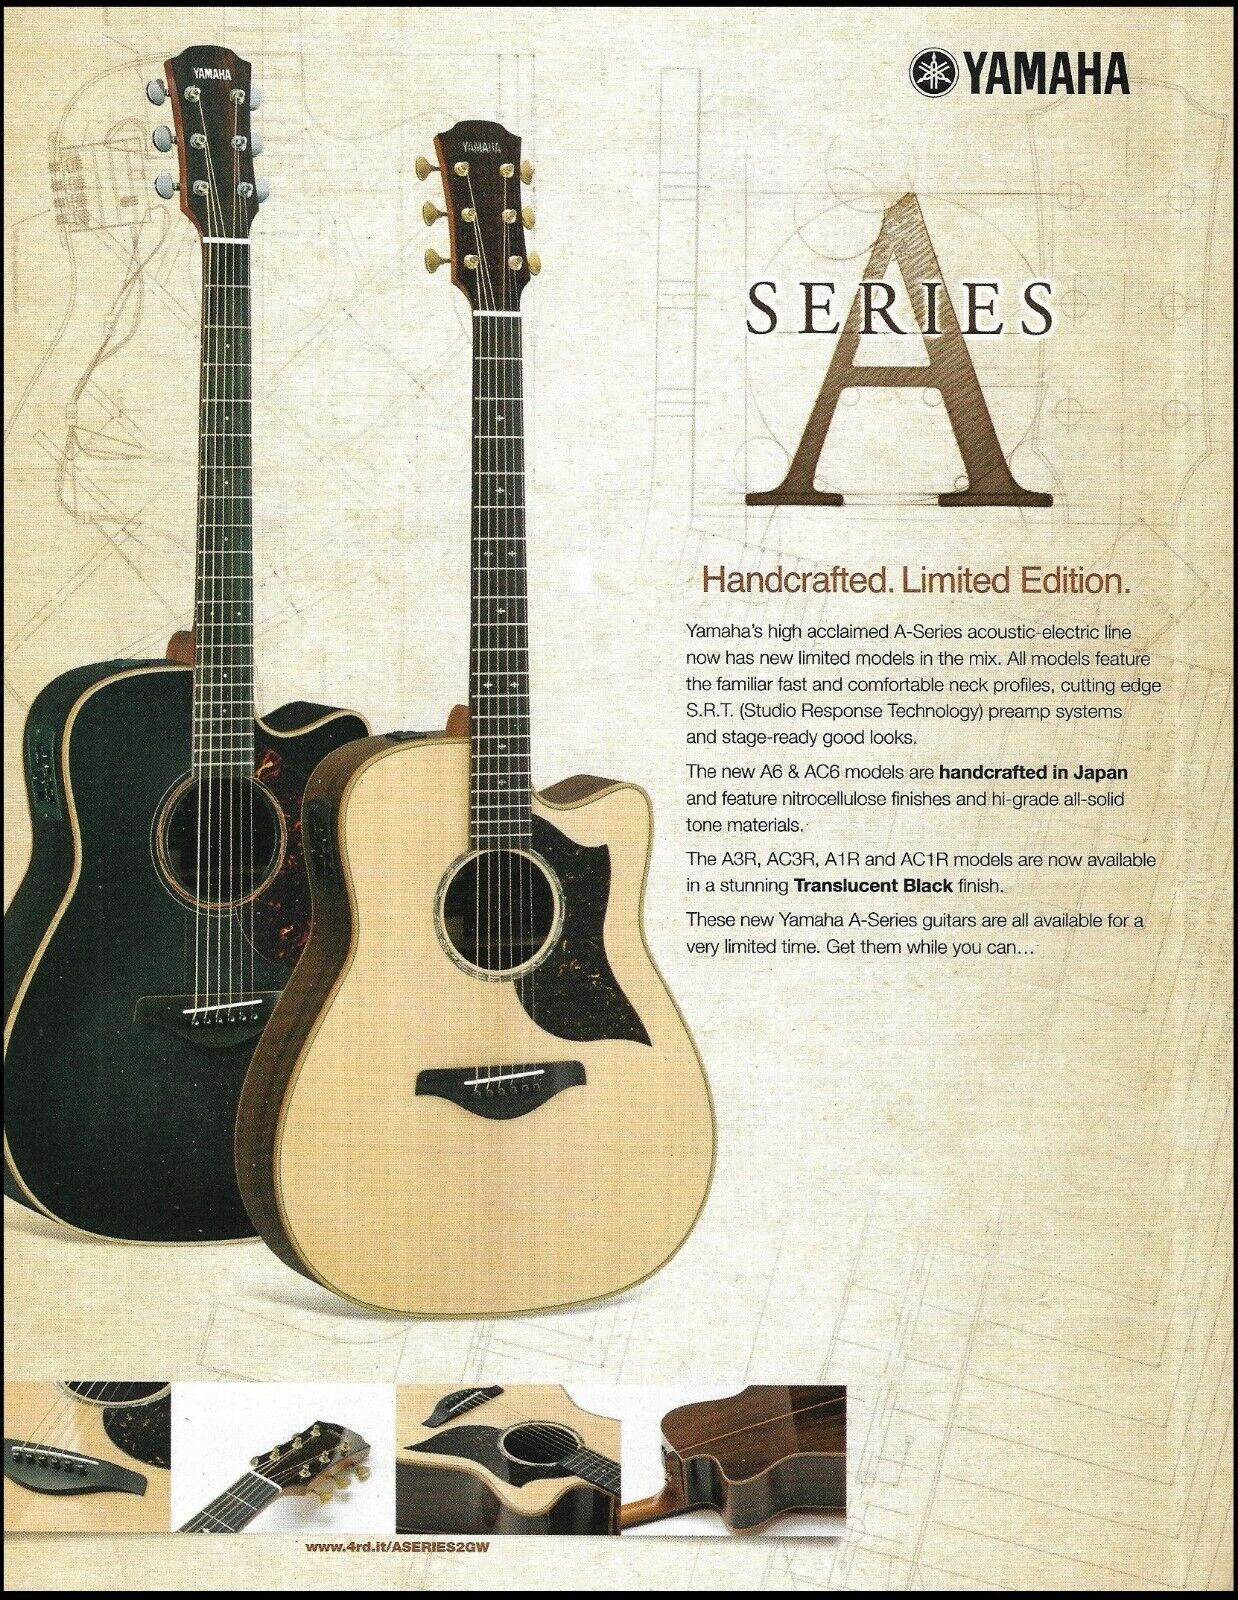 Yamaha A Series Translucent Black Acoustic Guitar ad 2015 advertisement print